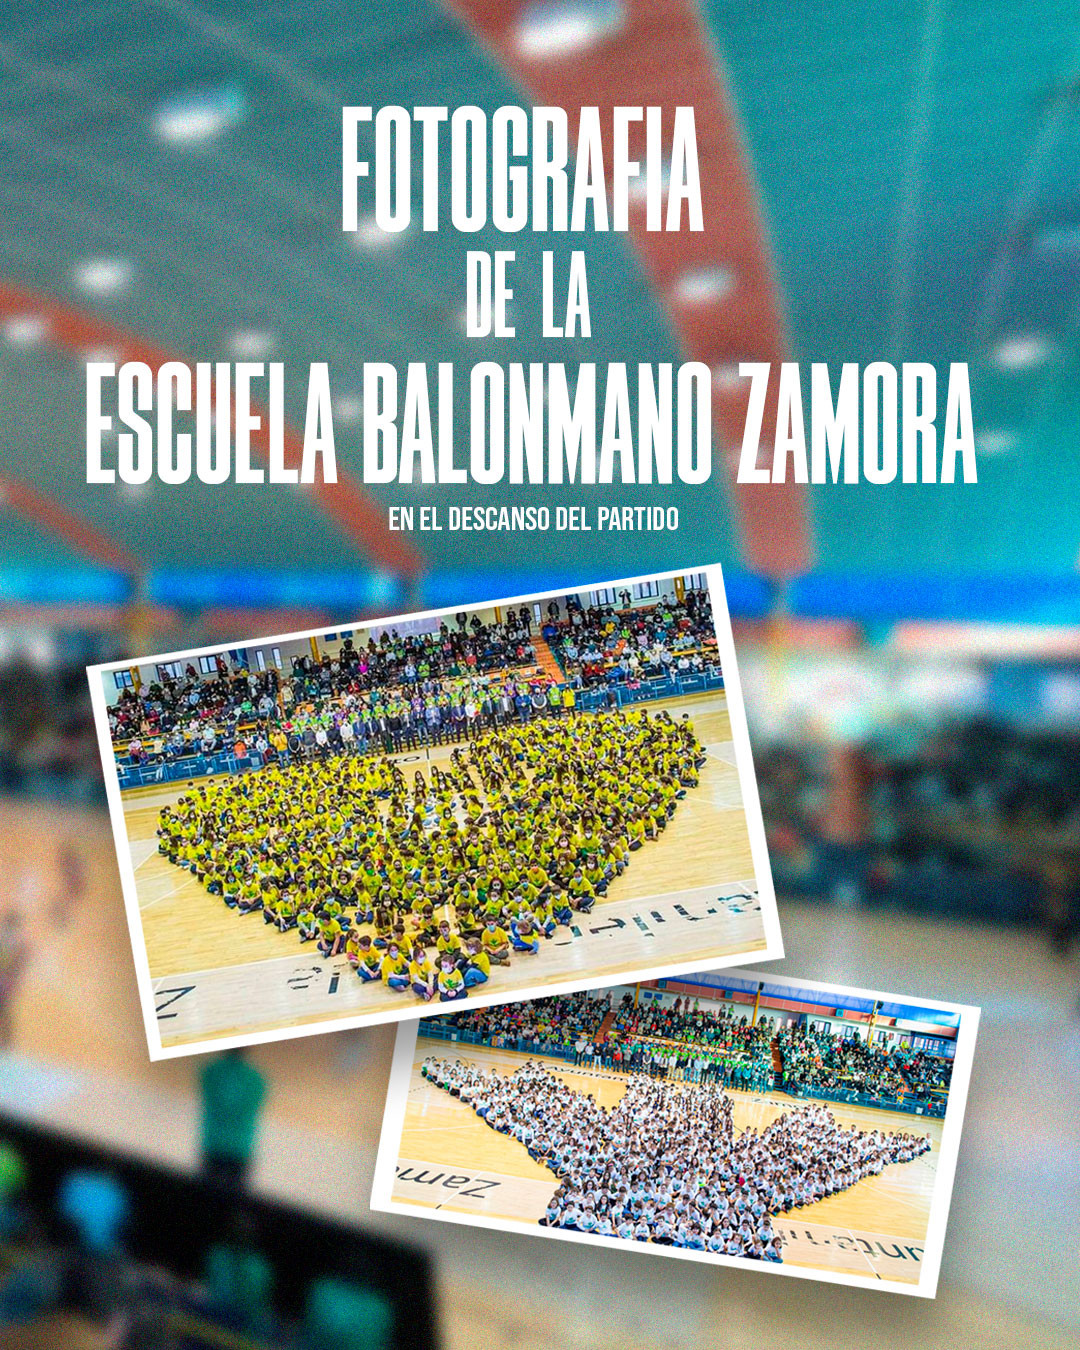 Du00eda de la Cantera   Balonmano Zamora (1)